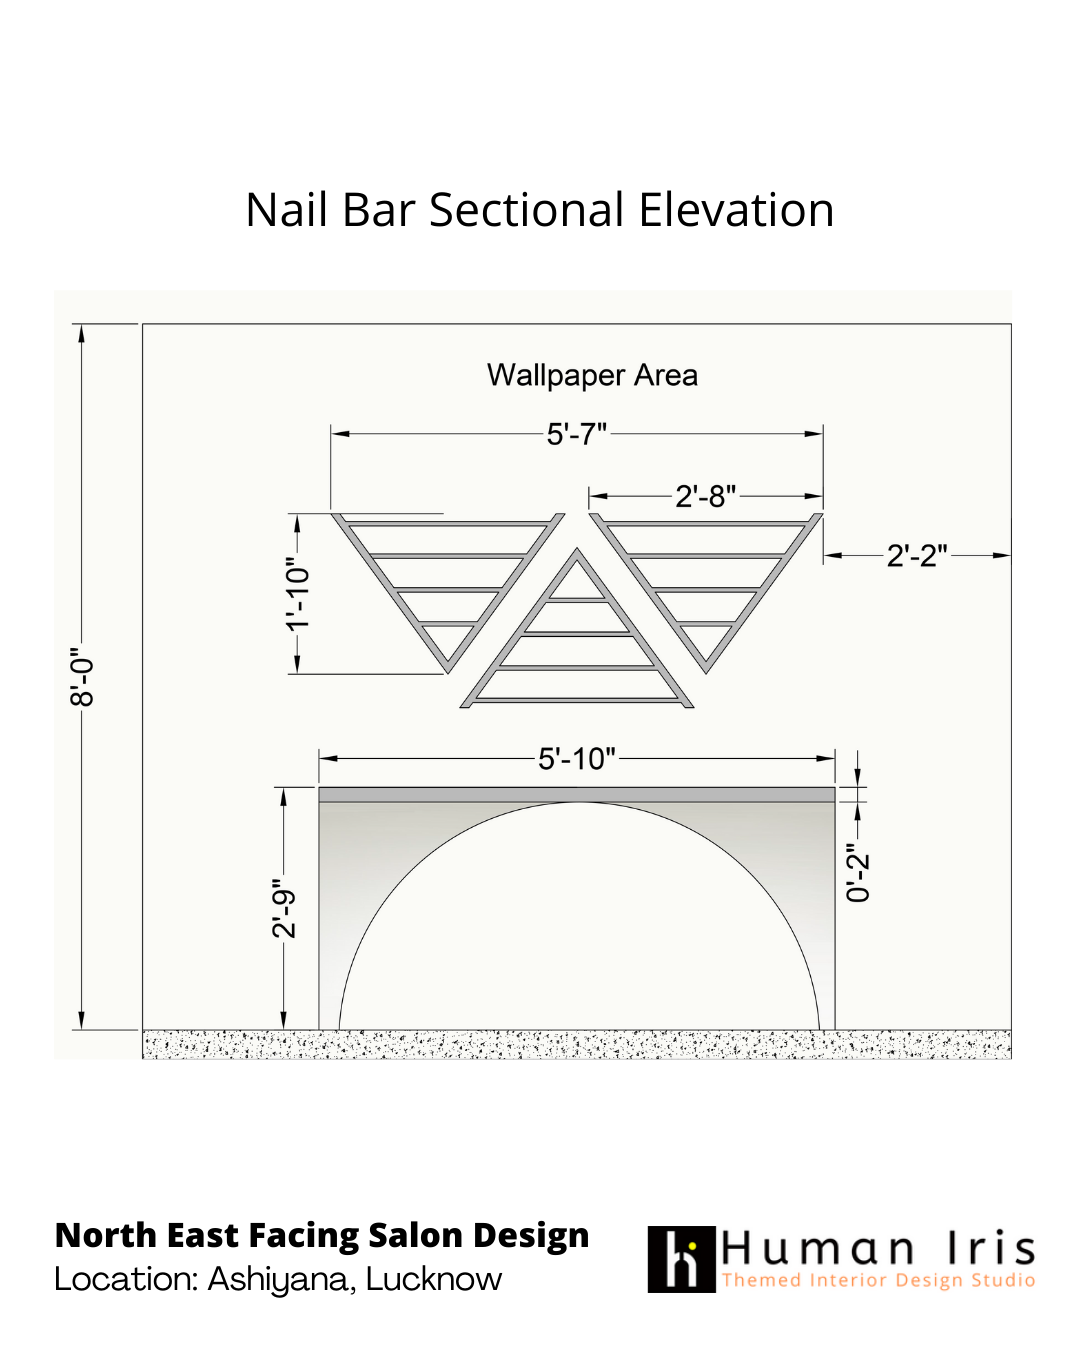 45' x 39' Salon Layout Plan and Elevation Design